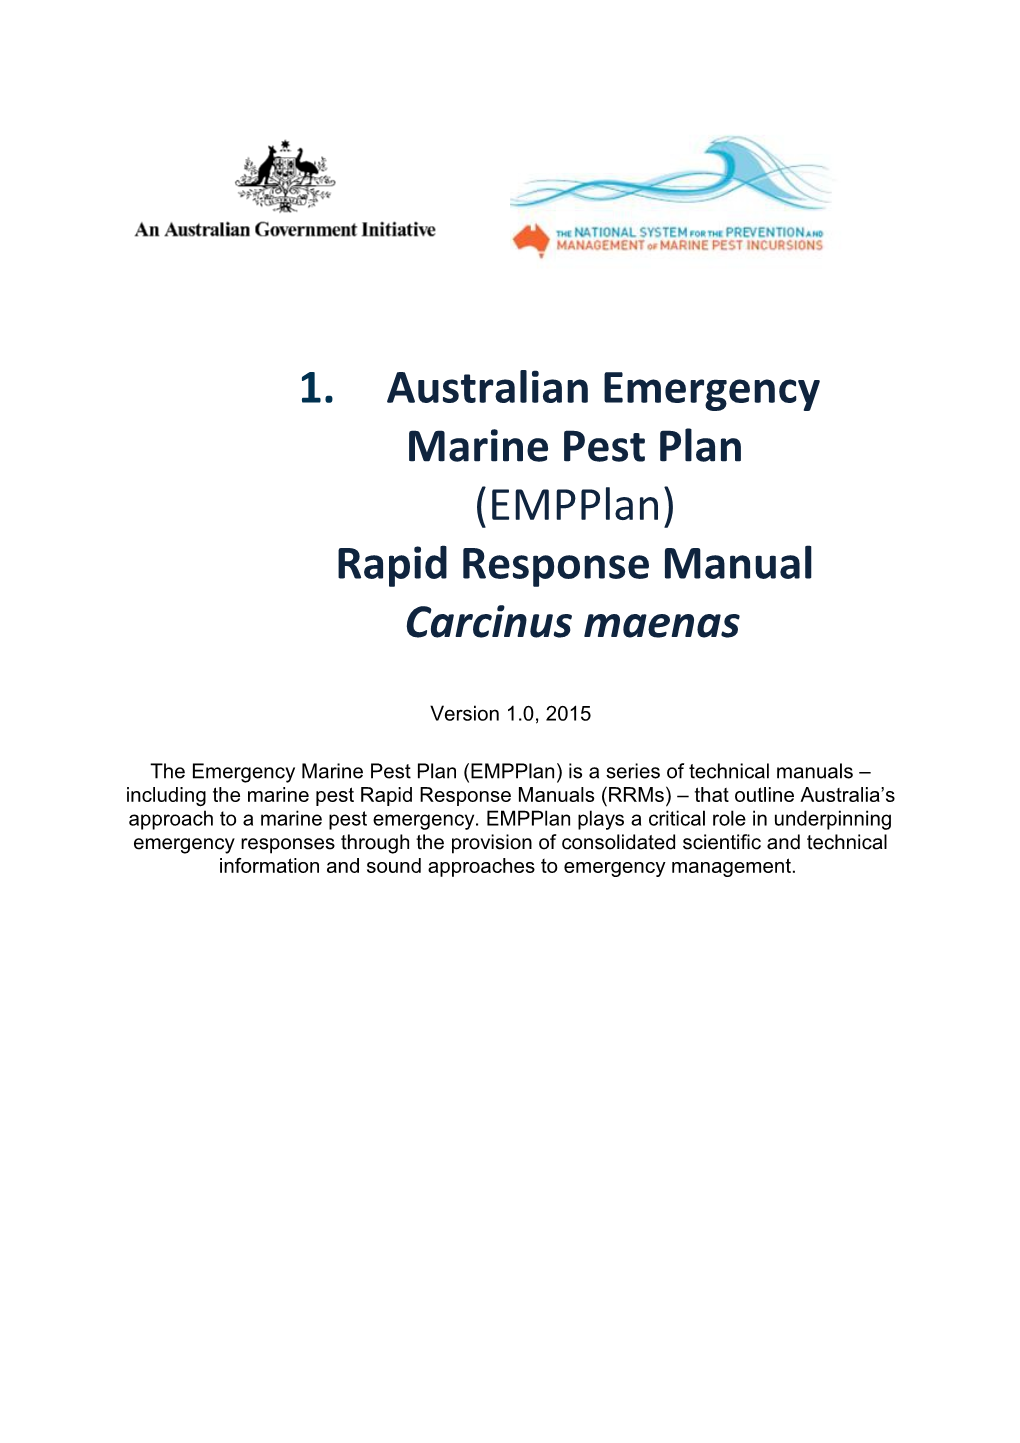 Australian Emergency Marine Pest Plan (Empplan) Rapid Response Manual Carcinus Maenas